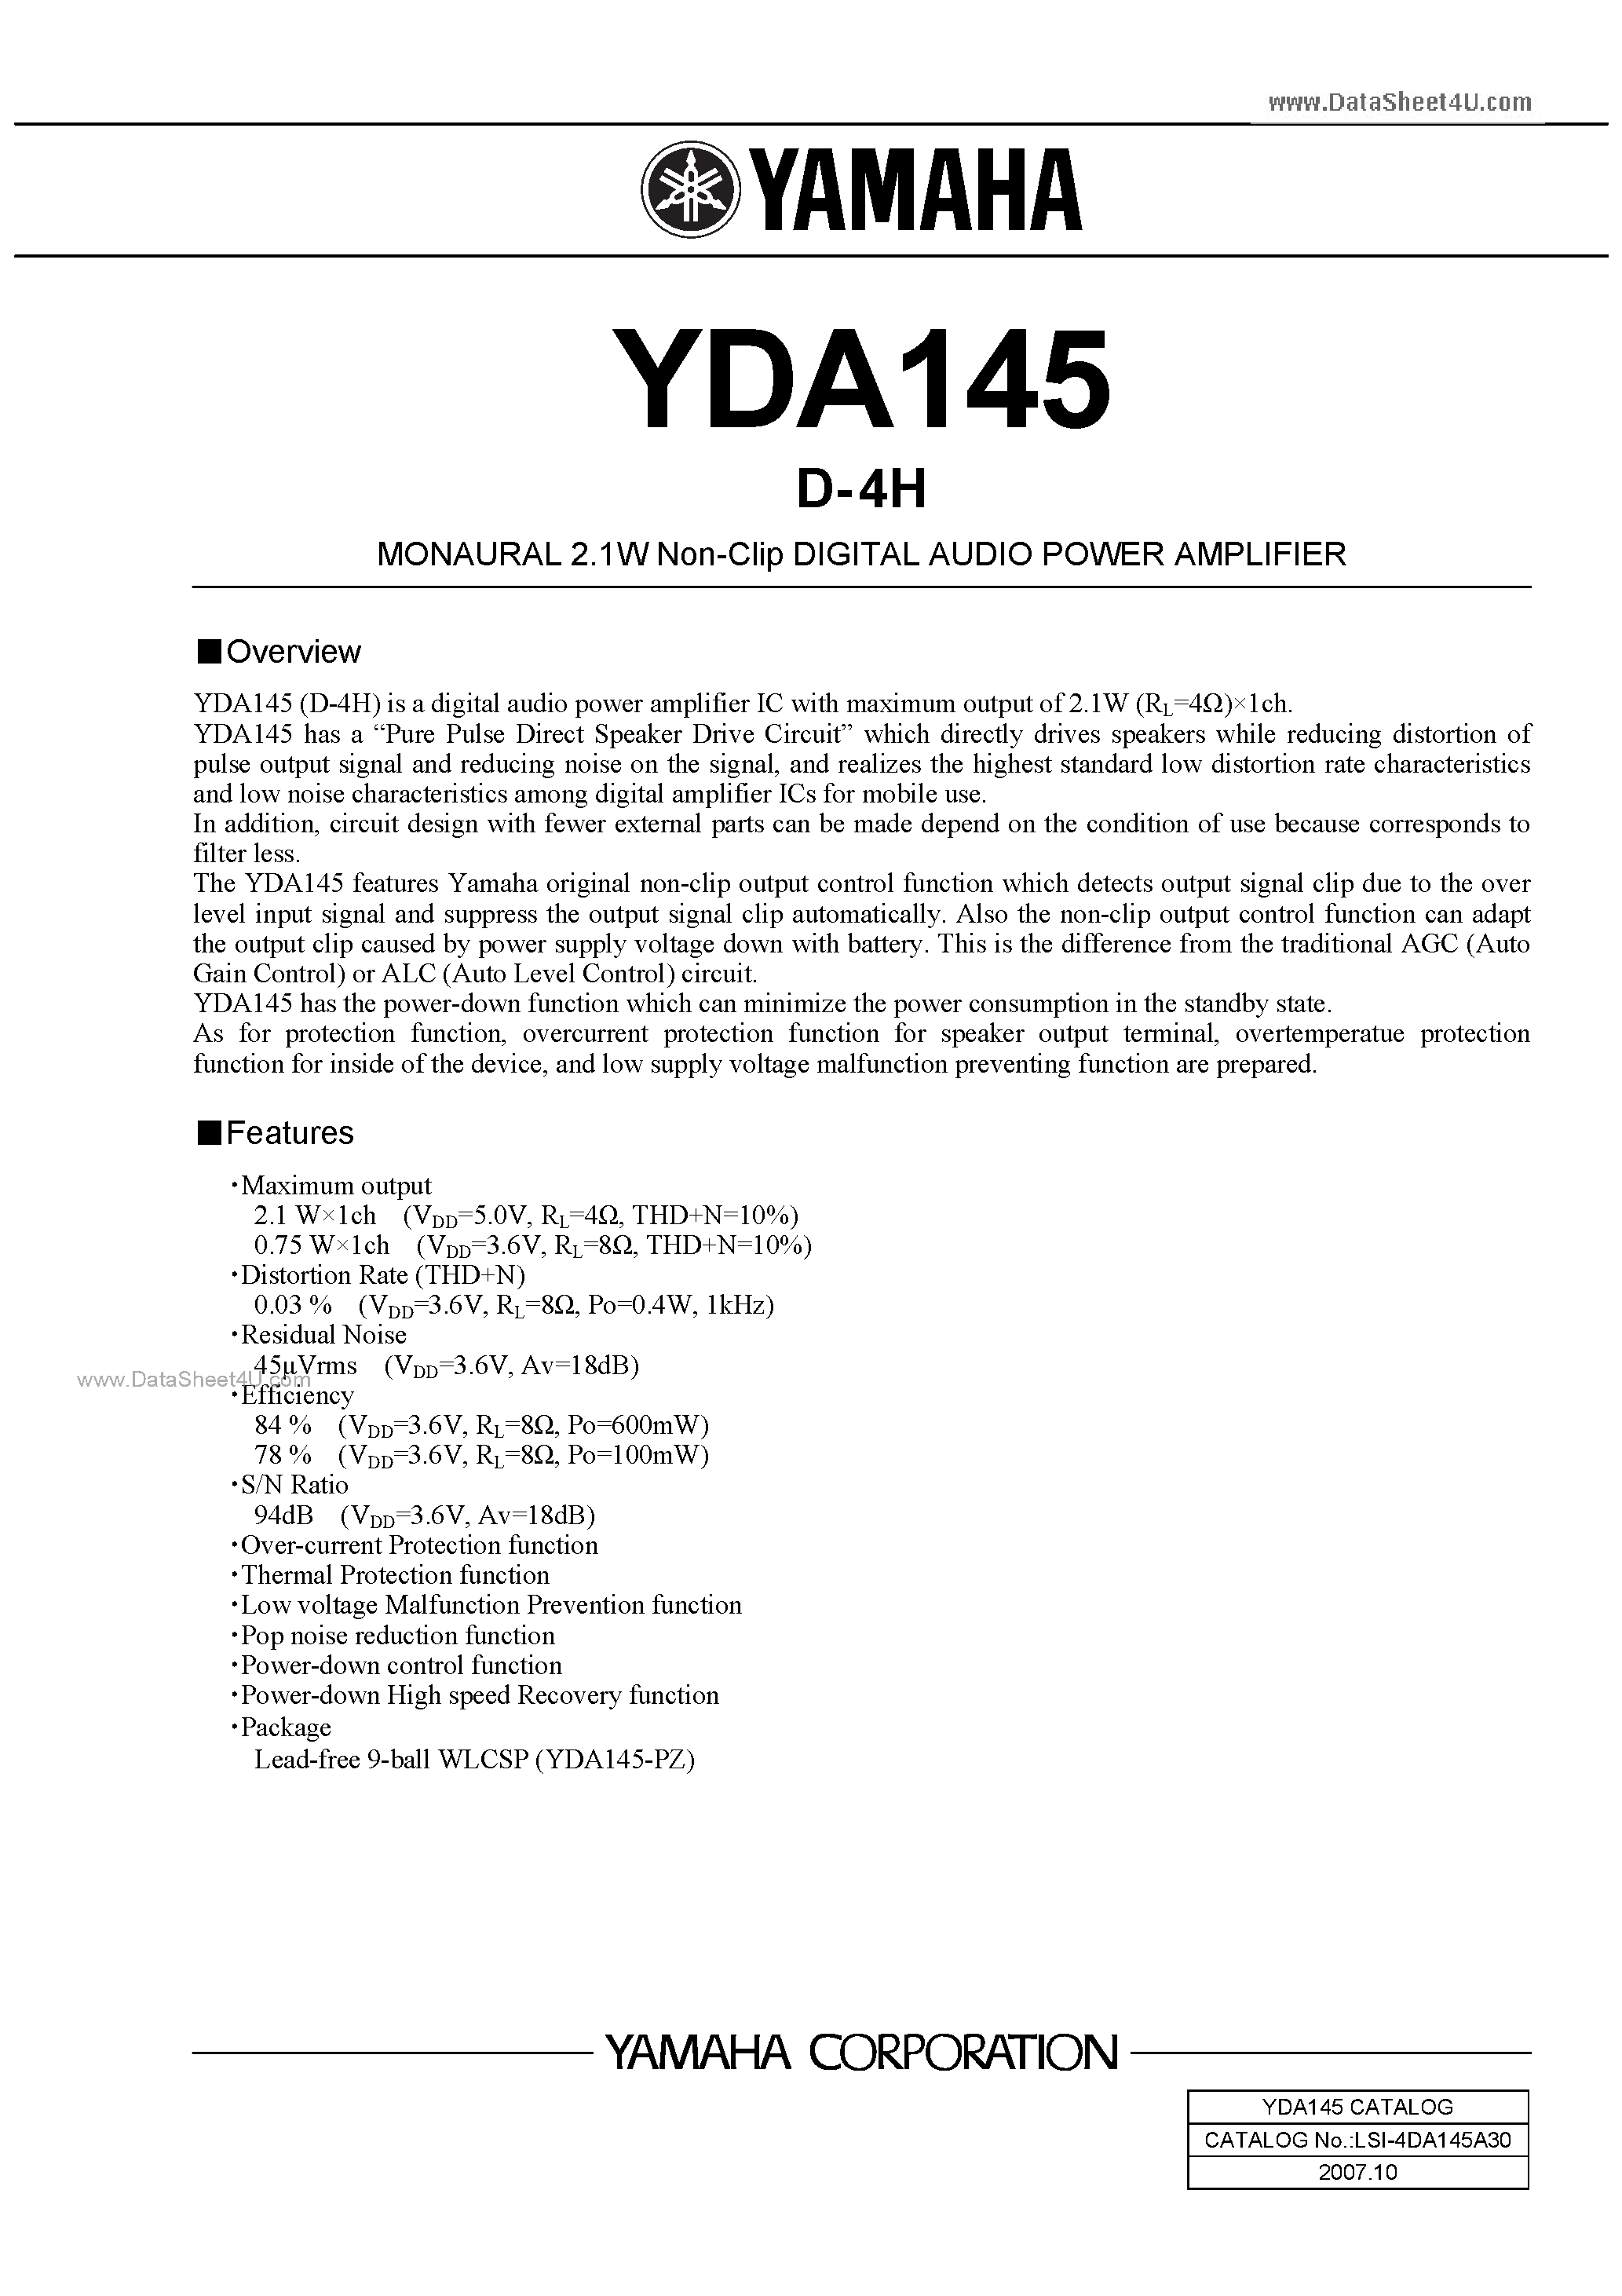 Datasheet YDA145 - MONAURAL 2.1W Non-Clip DIGITAL AUDIO POWER AMPLIFIER page 1